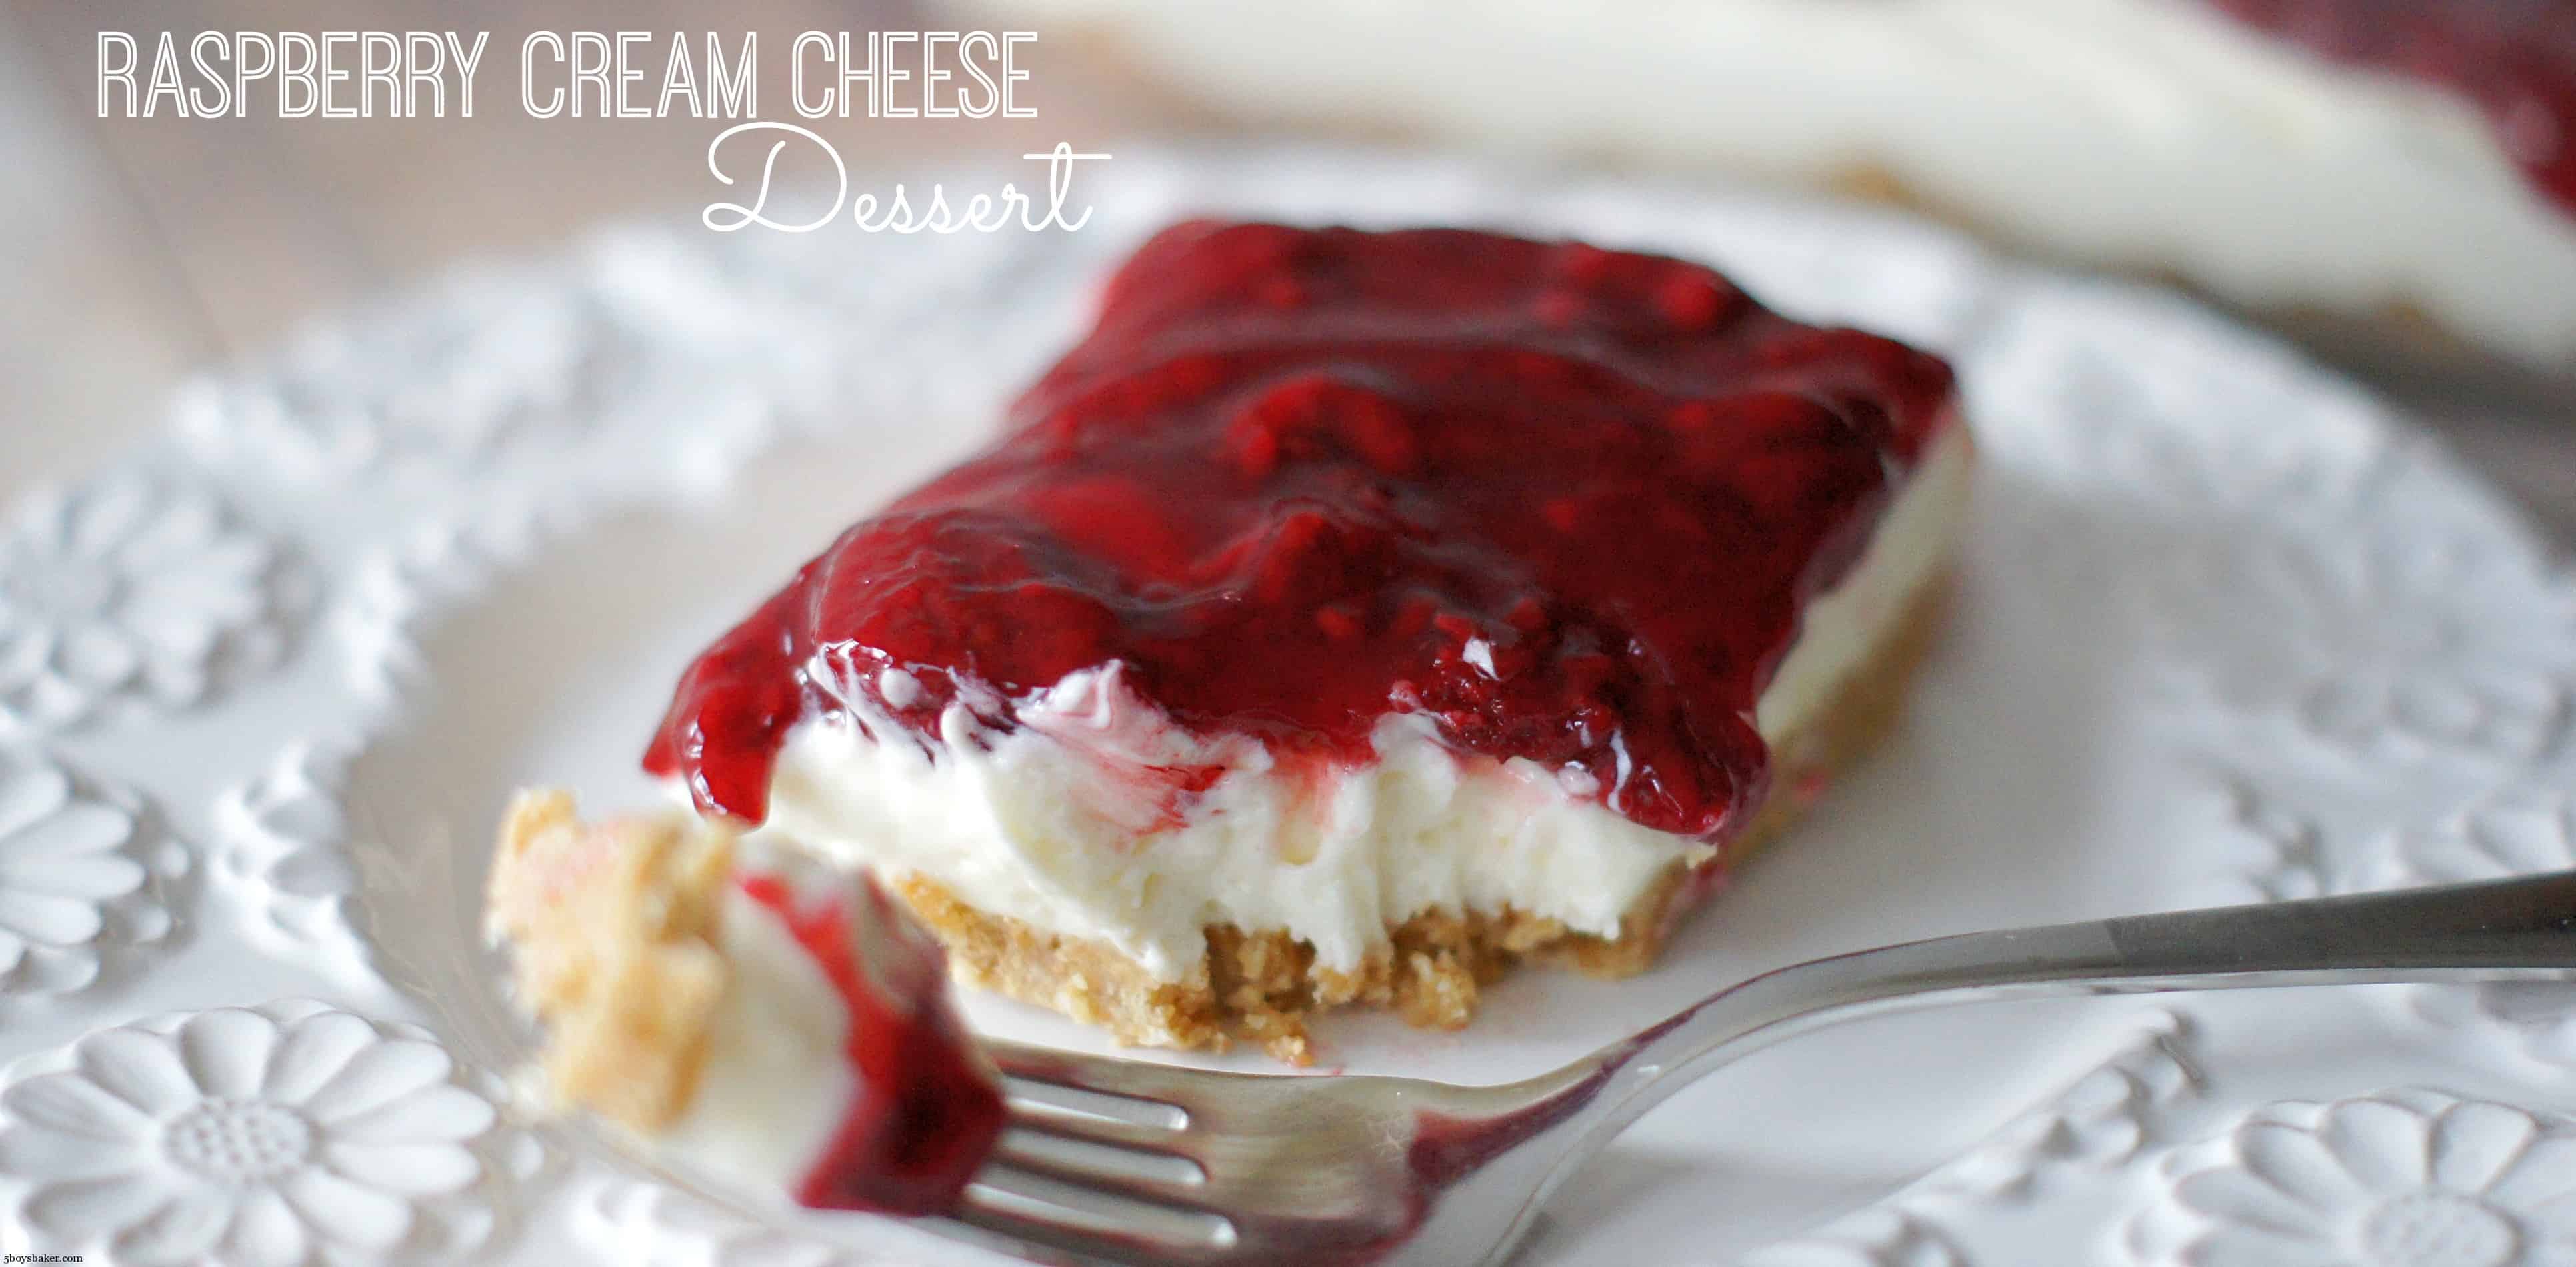 Raspberry cream cheese dessert